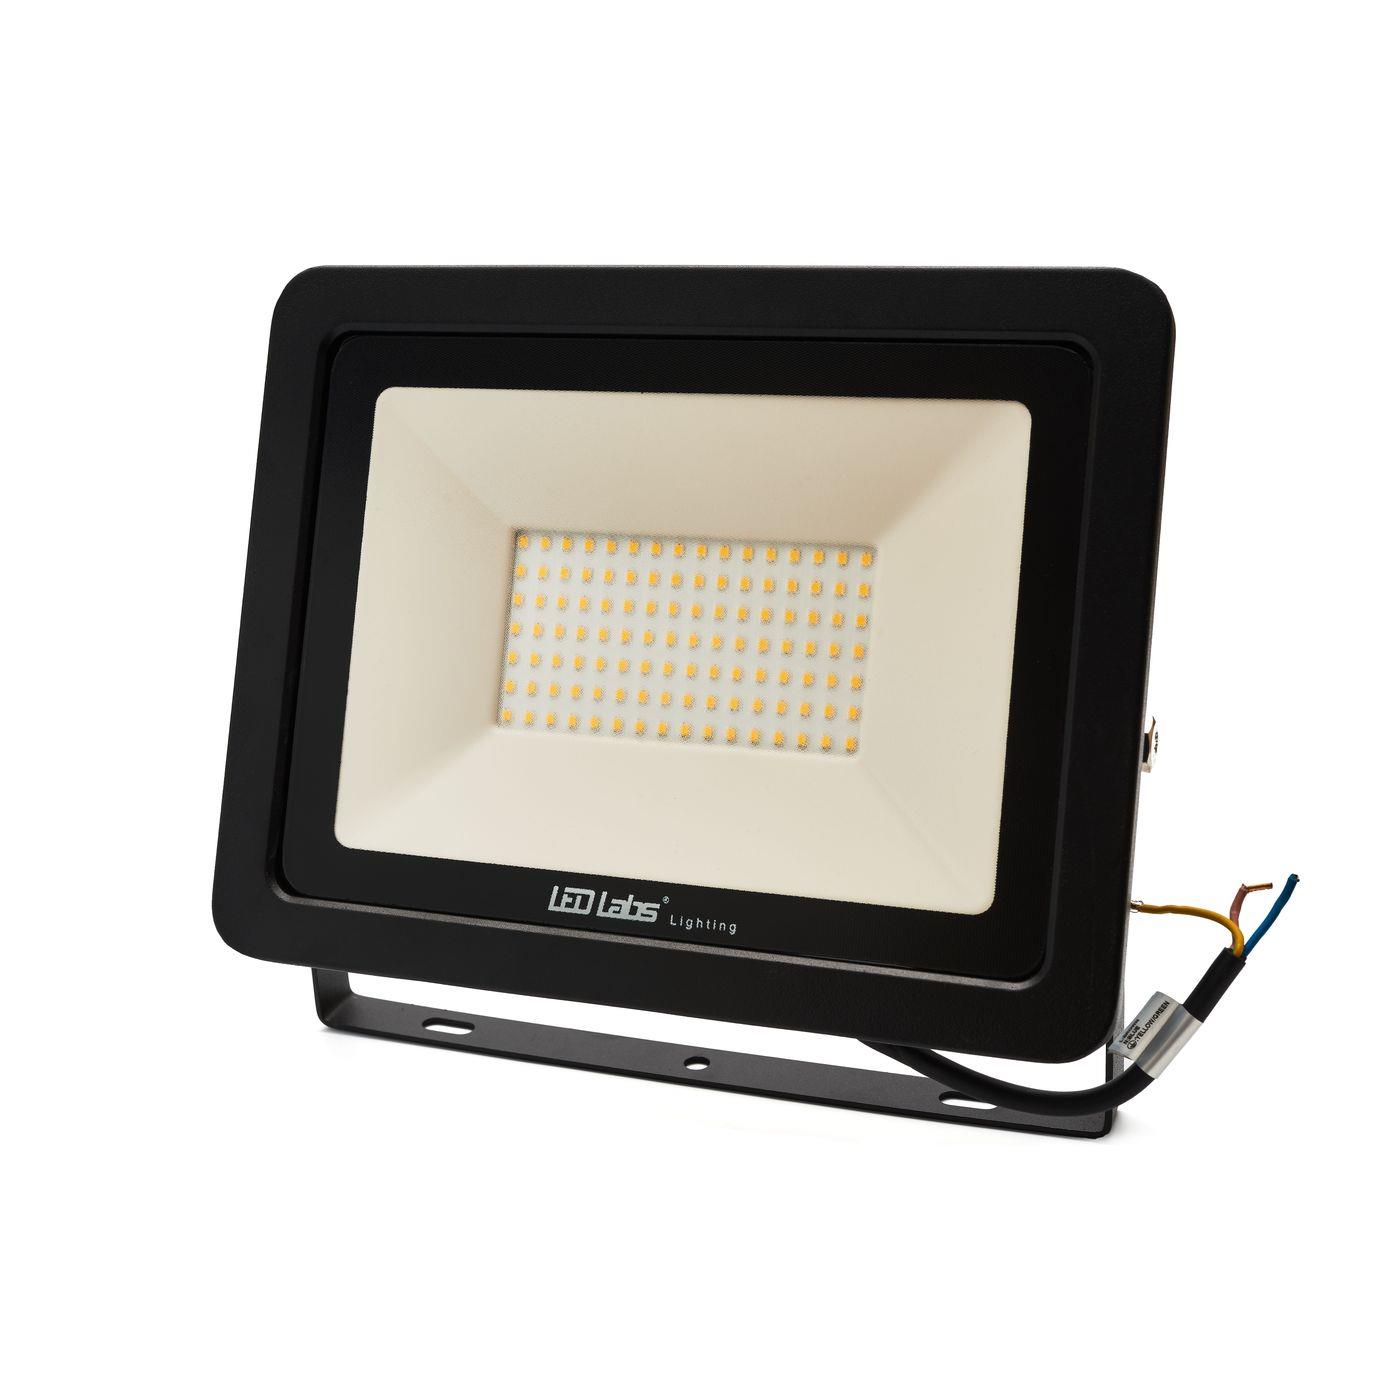 LED Floodlight Spotlight 200W 17000lm Neutral White 4000K 380x280x45mm Black -35...+55°C IP65 110° CRI 80+